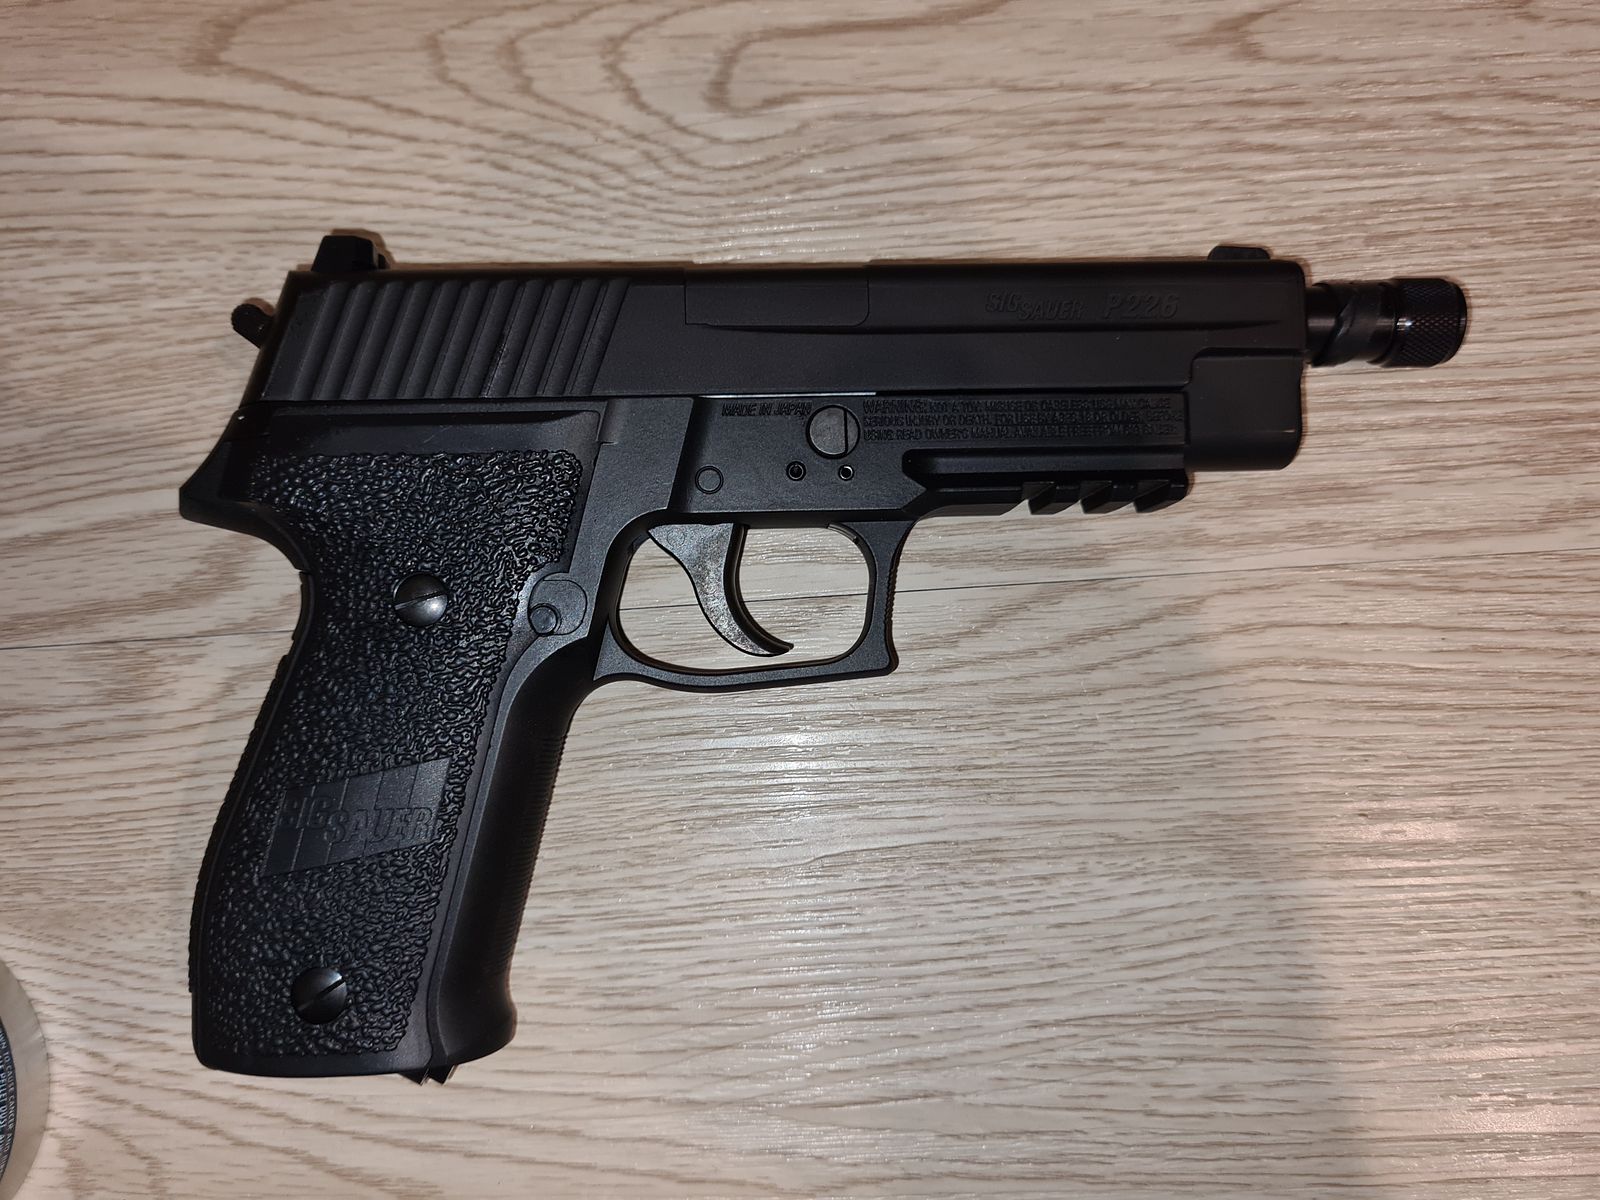  Co2-Pistole SIG SAUER P226 Schwarz  + ca 950stk. 4,5 mm Diabolo  + 8 Co2-Kapseln Umarex